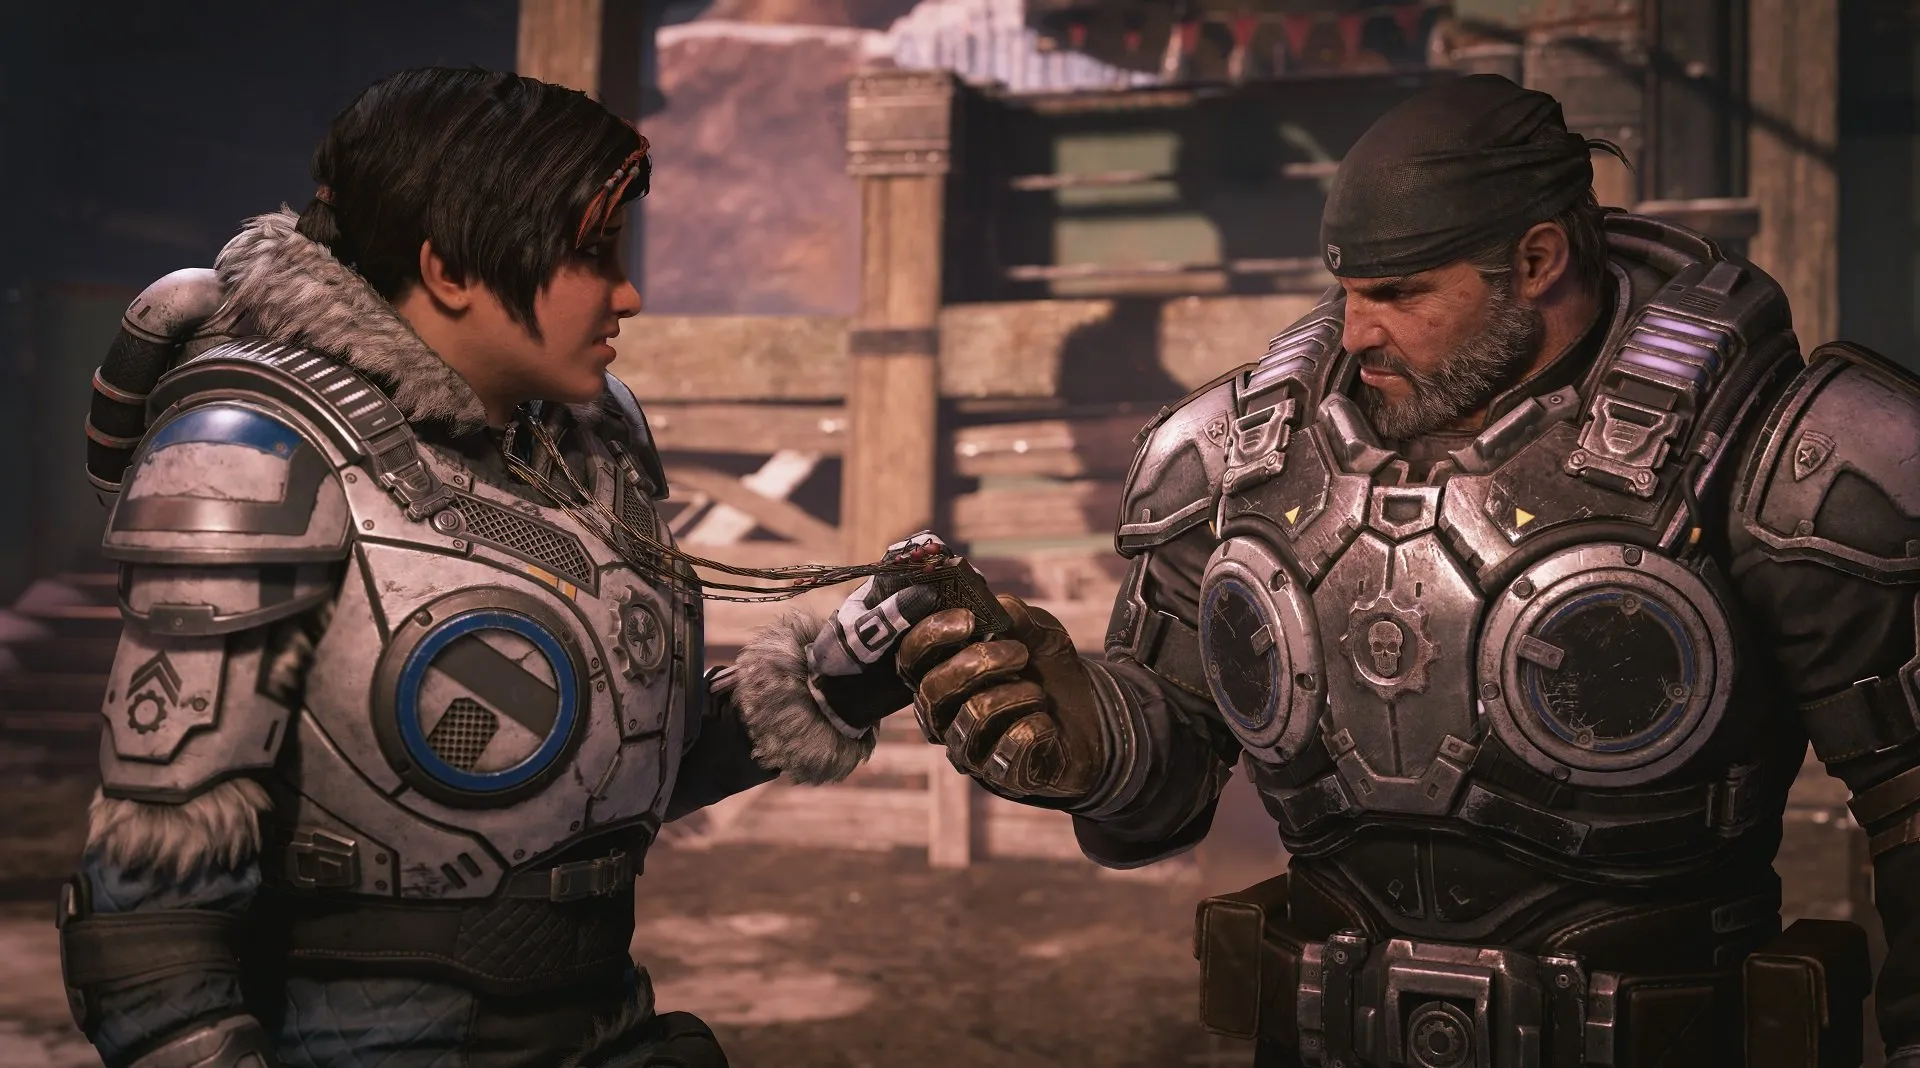 We all start somewhere: Six basic Gears of War 3 multiplayer tips